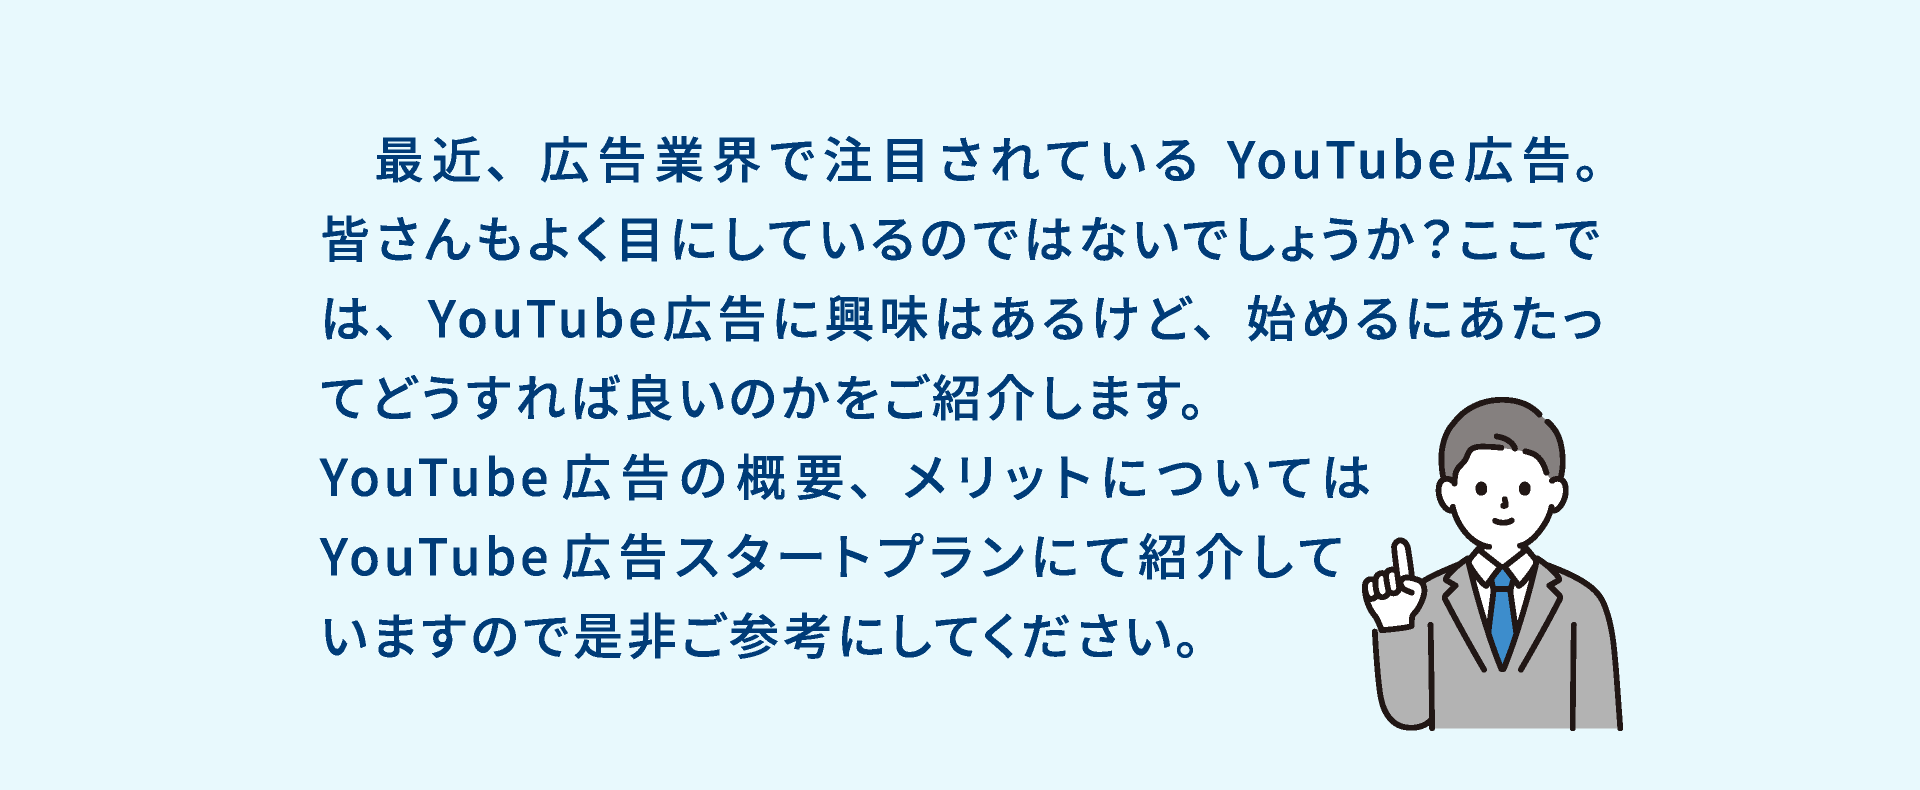 Youtubeバンパー広告